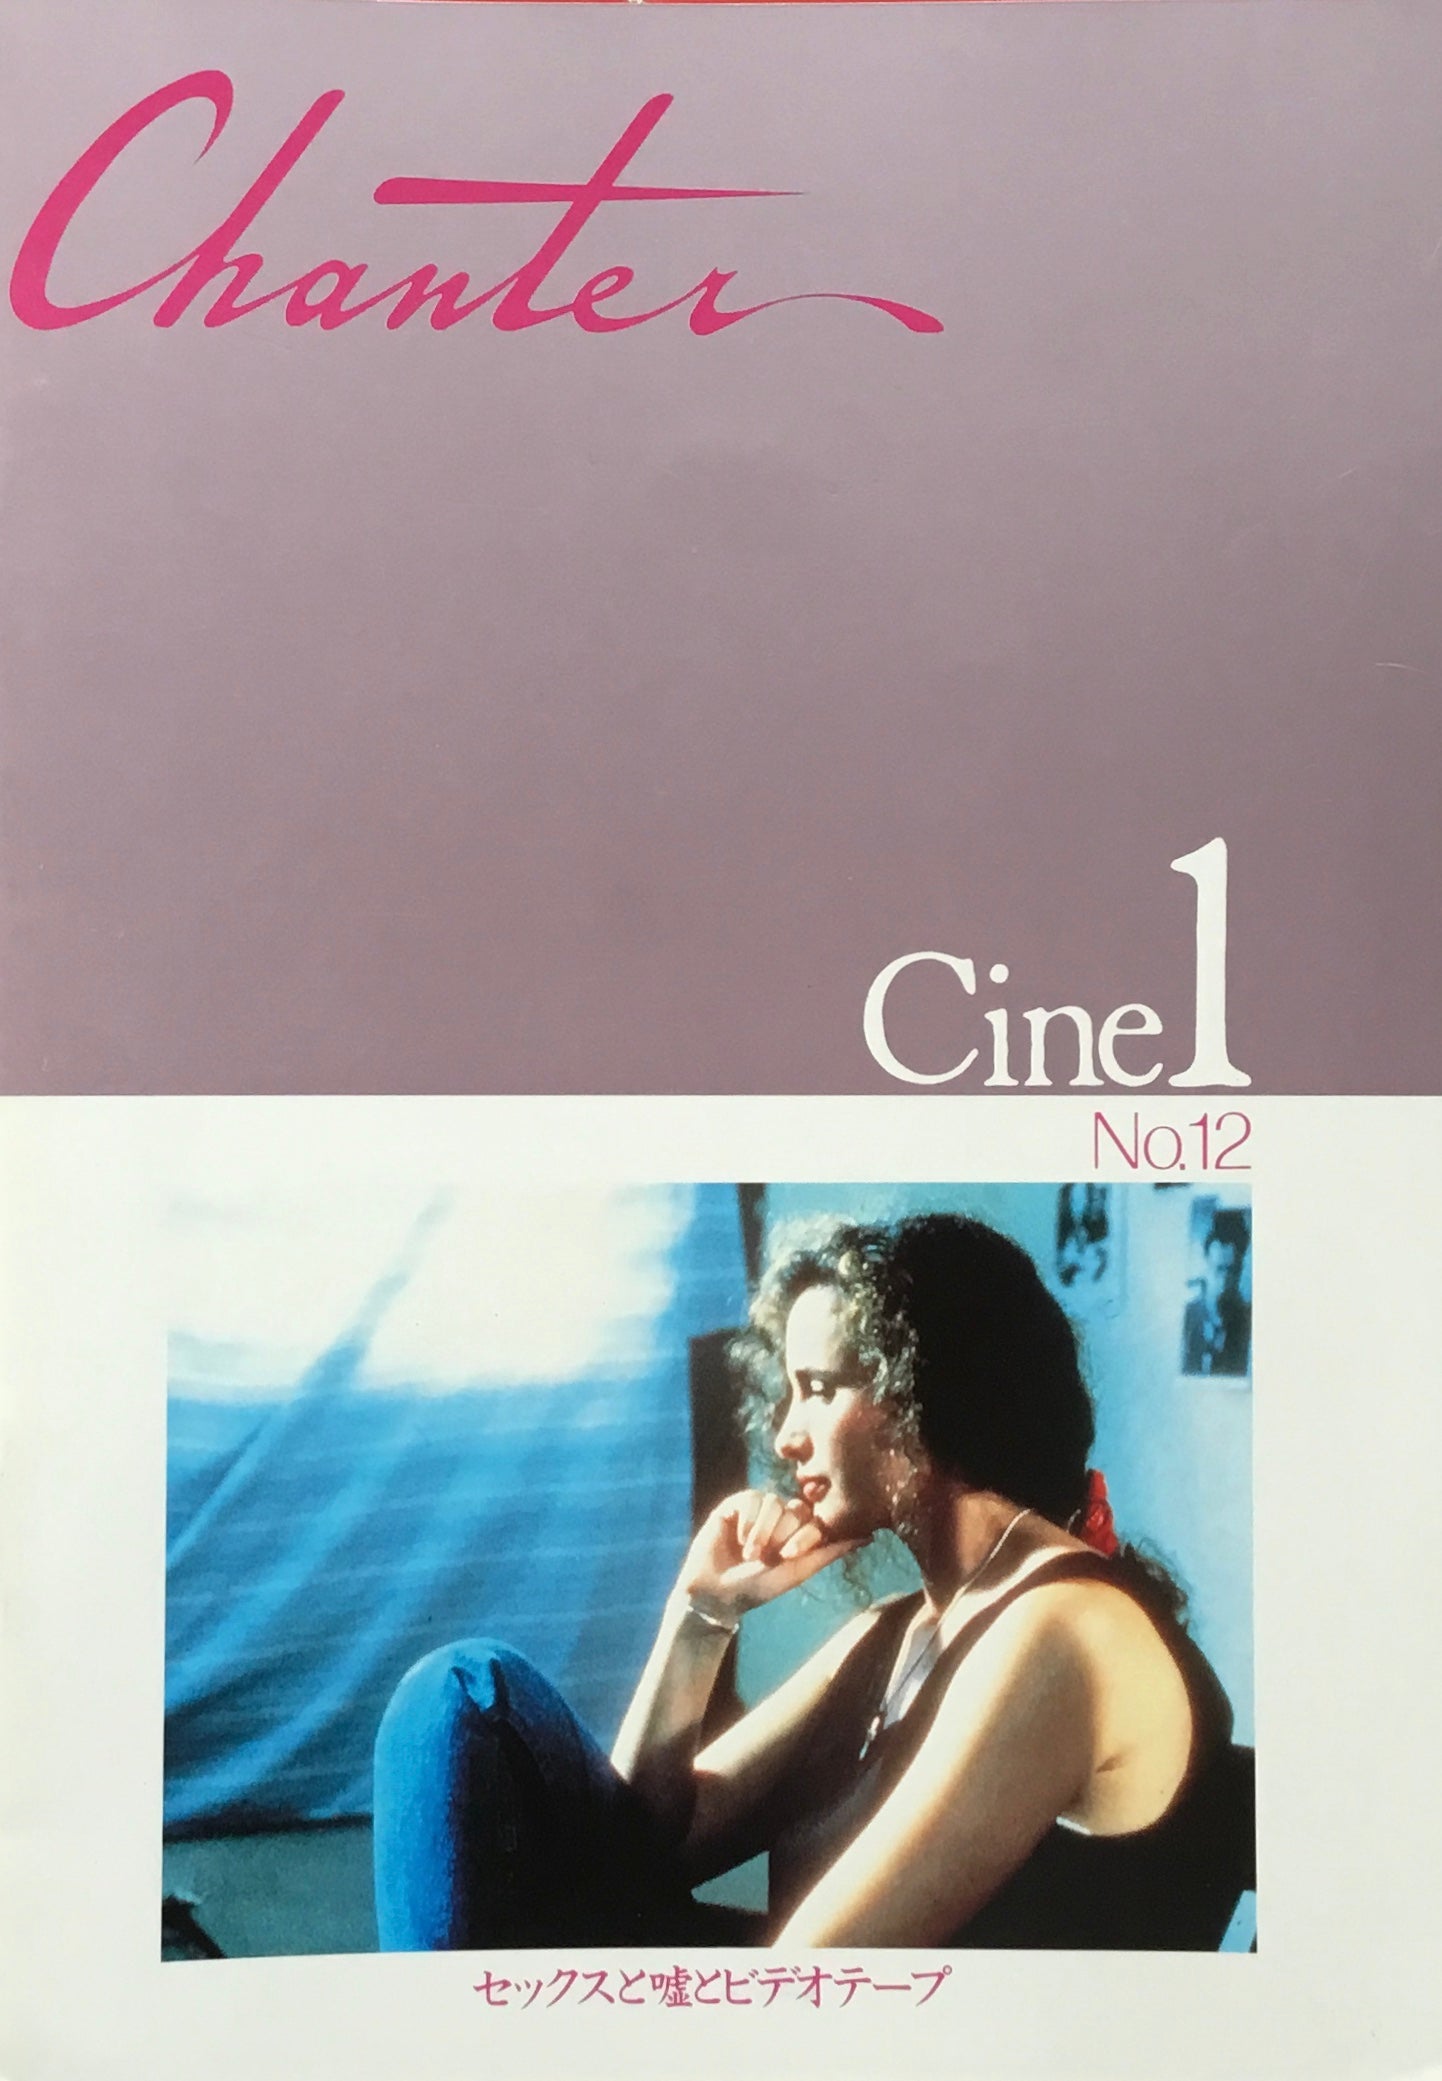 Chanter　Cine1　No12　セックスと嘘とビデオテープ